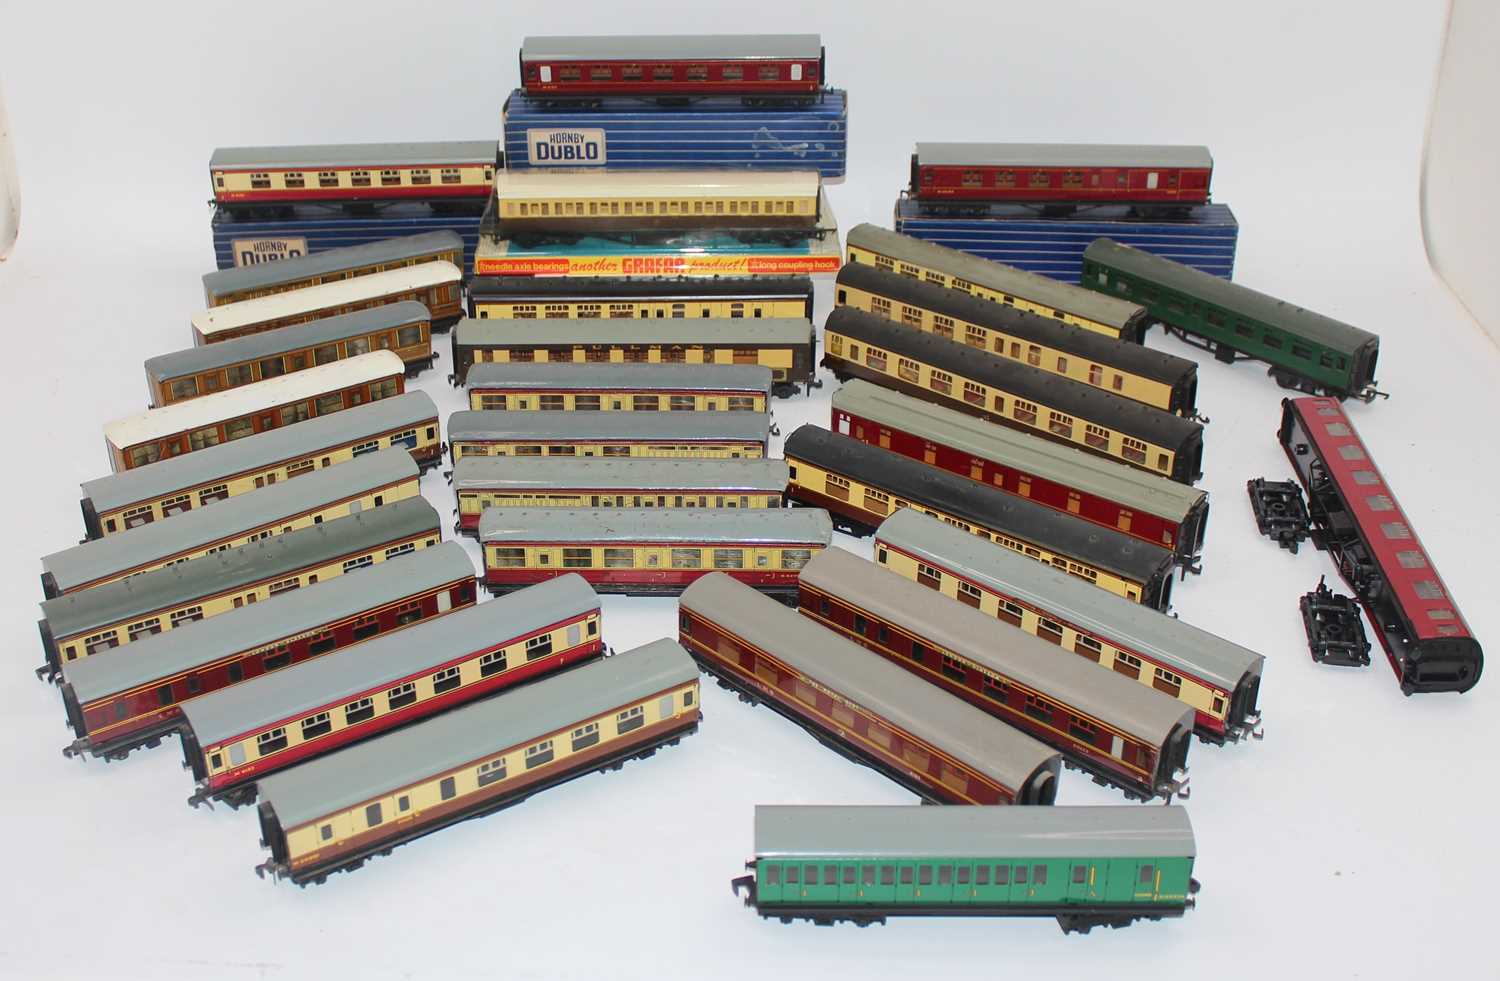 Tray containing 26 Hornby Dublo coaches and 4 other makes. Dublo includes D1, D3, D11, D12, D20, D22